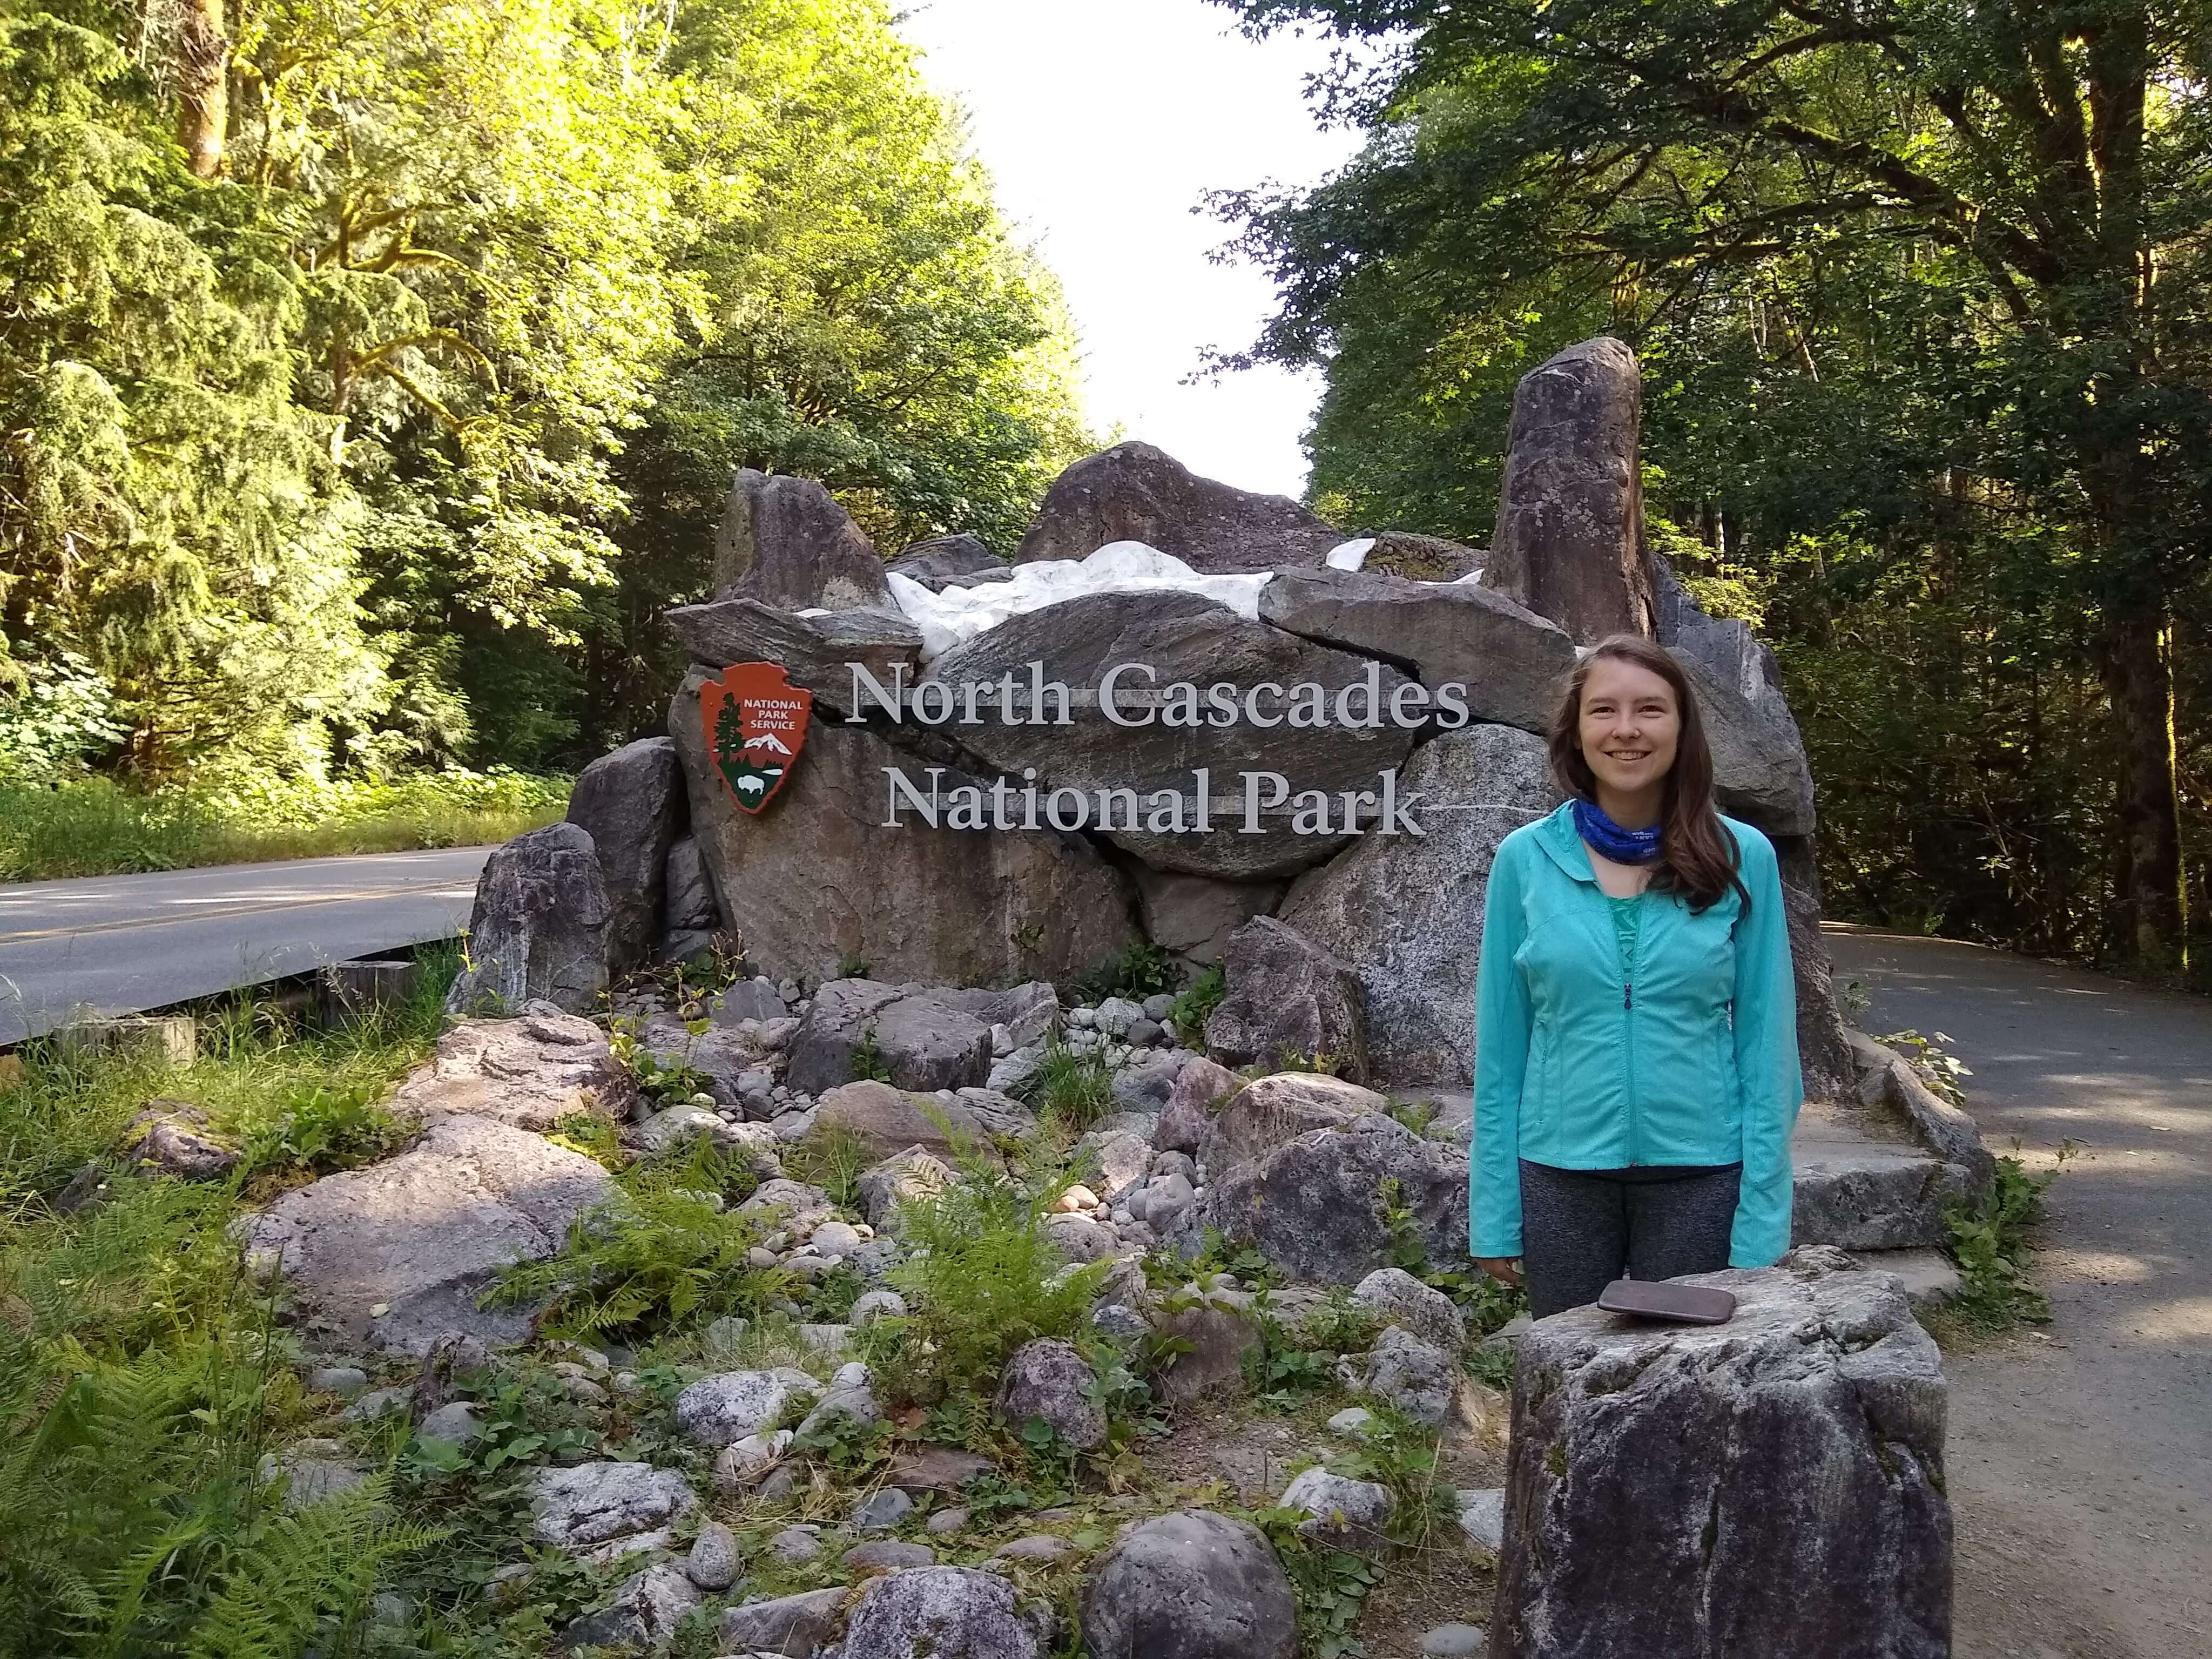 North Cascades National Park entrance sign